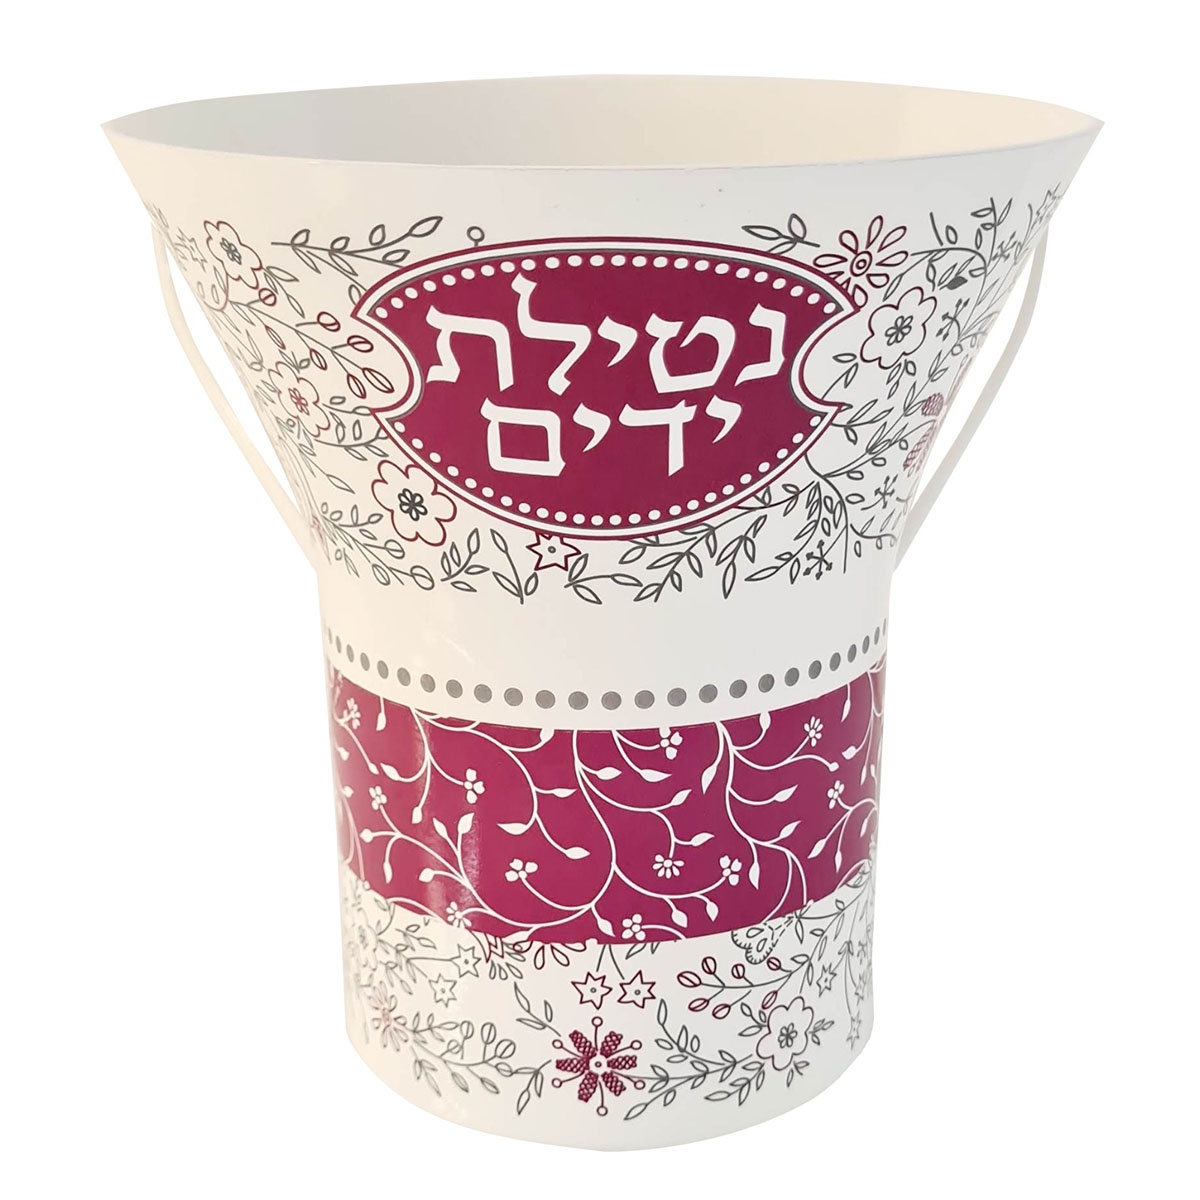 Dorit Judaica Netilat Yadayim Handwashing Cup With Red Floral Design - 1